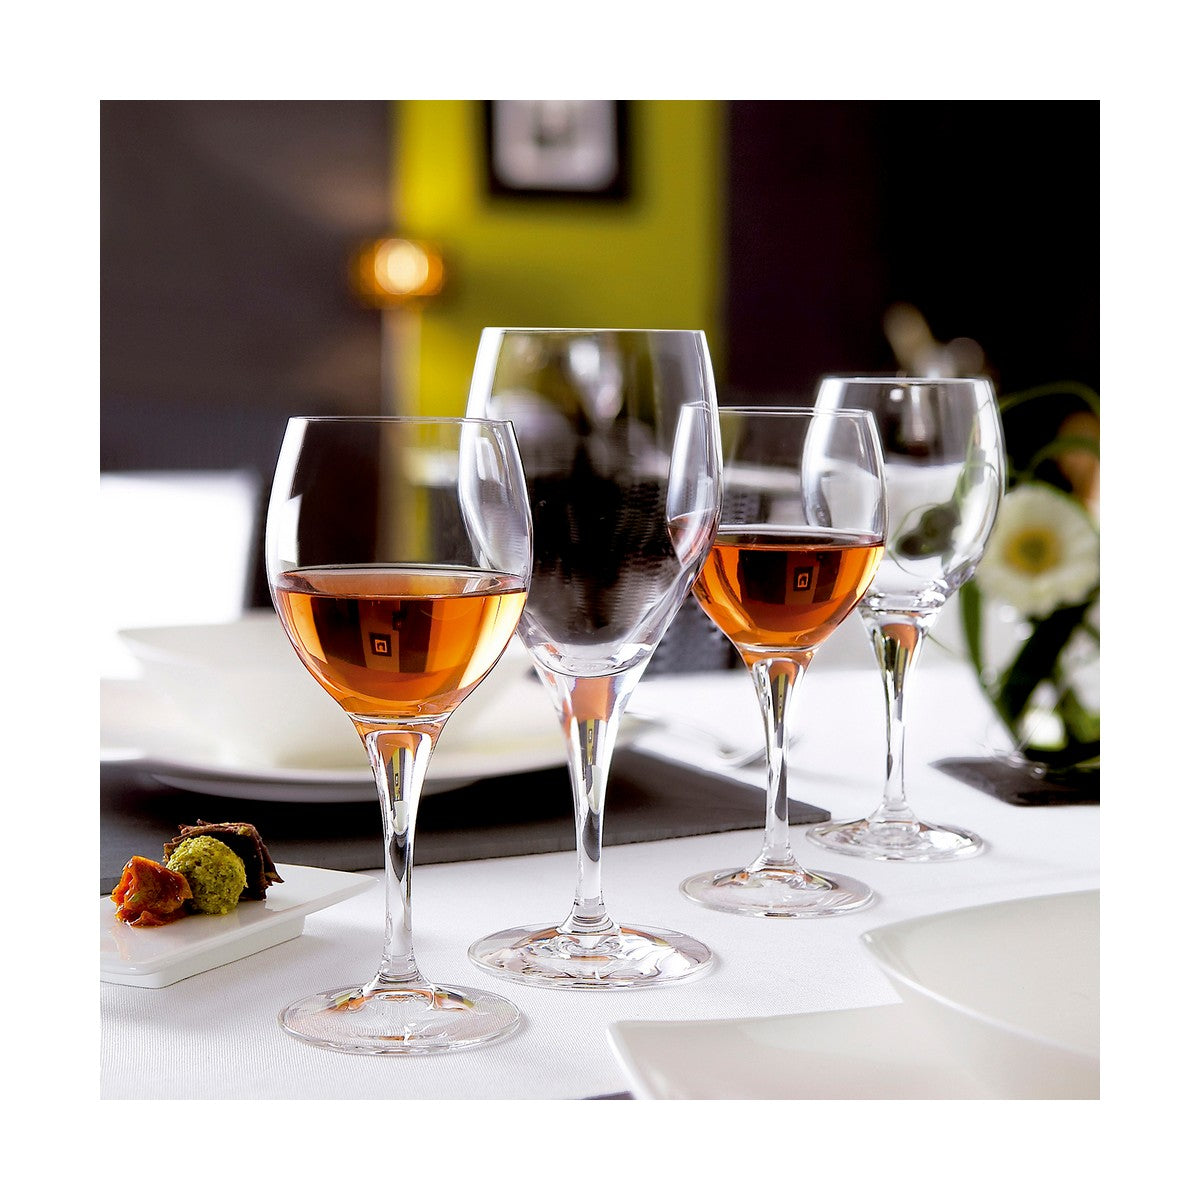 Wine glass Chef & Sommelier Sensation Exalt 410 ml 6 Pieces